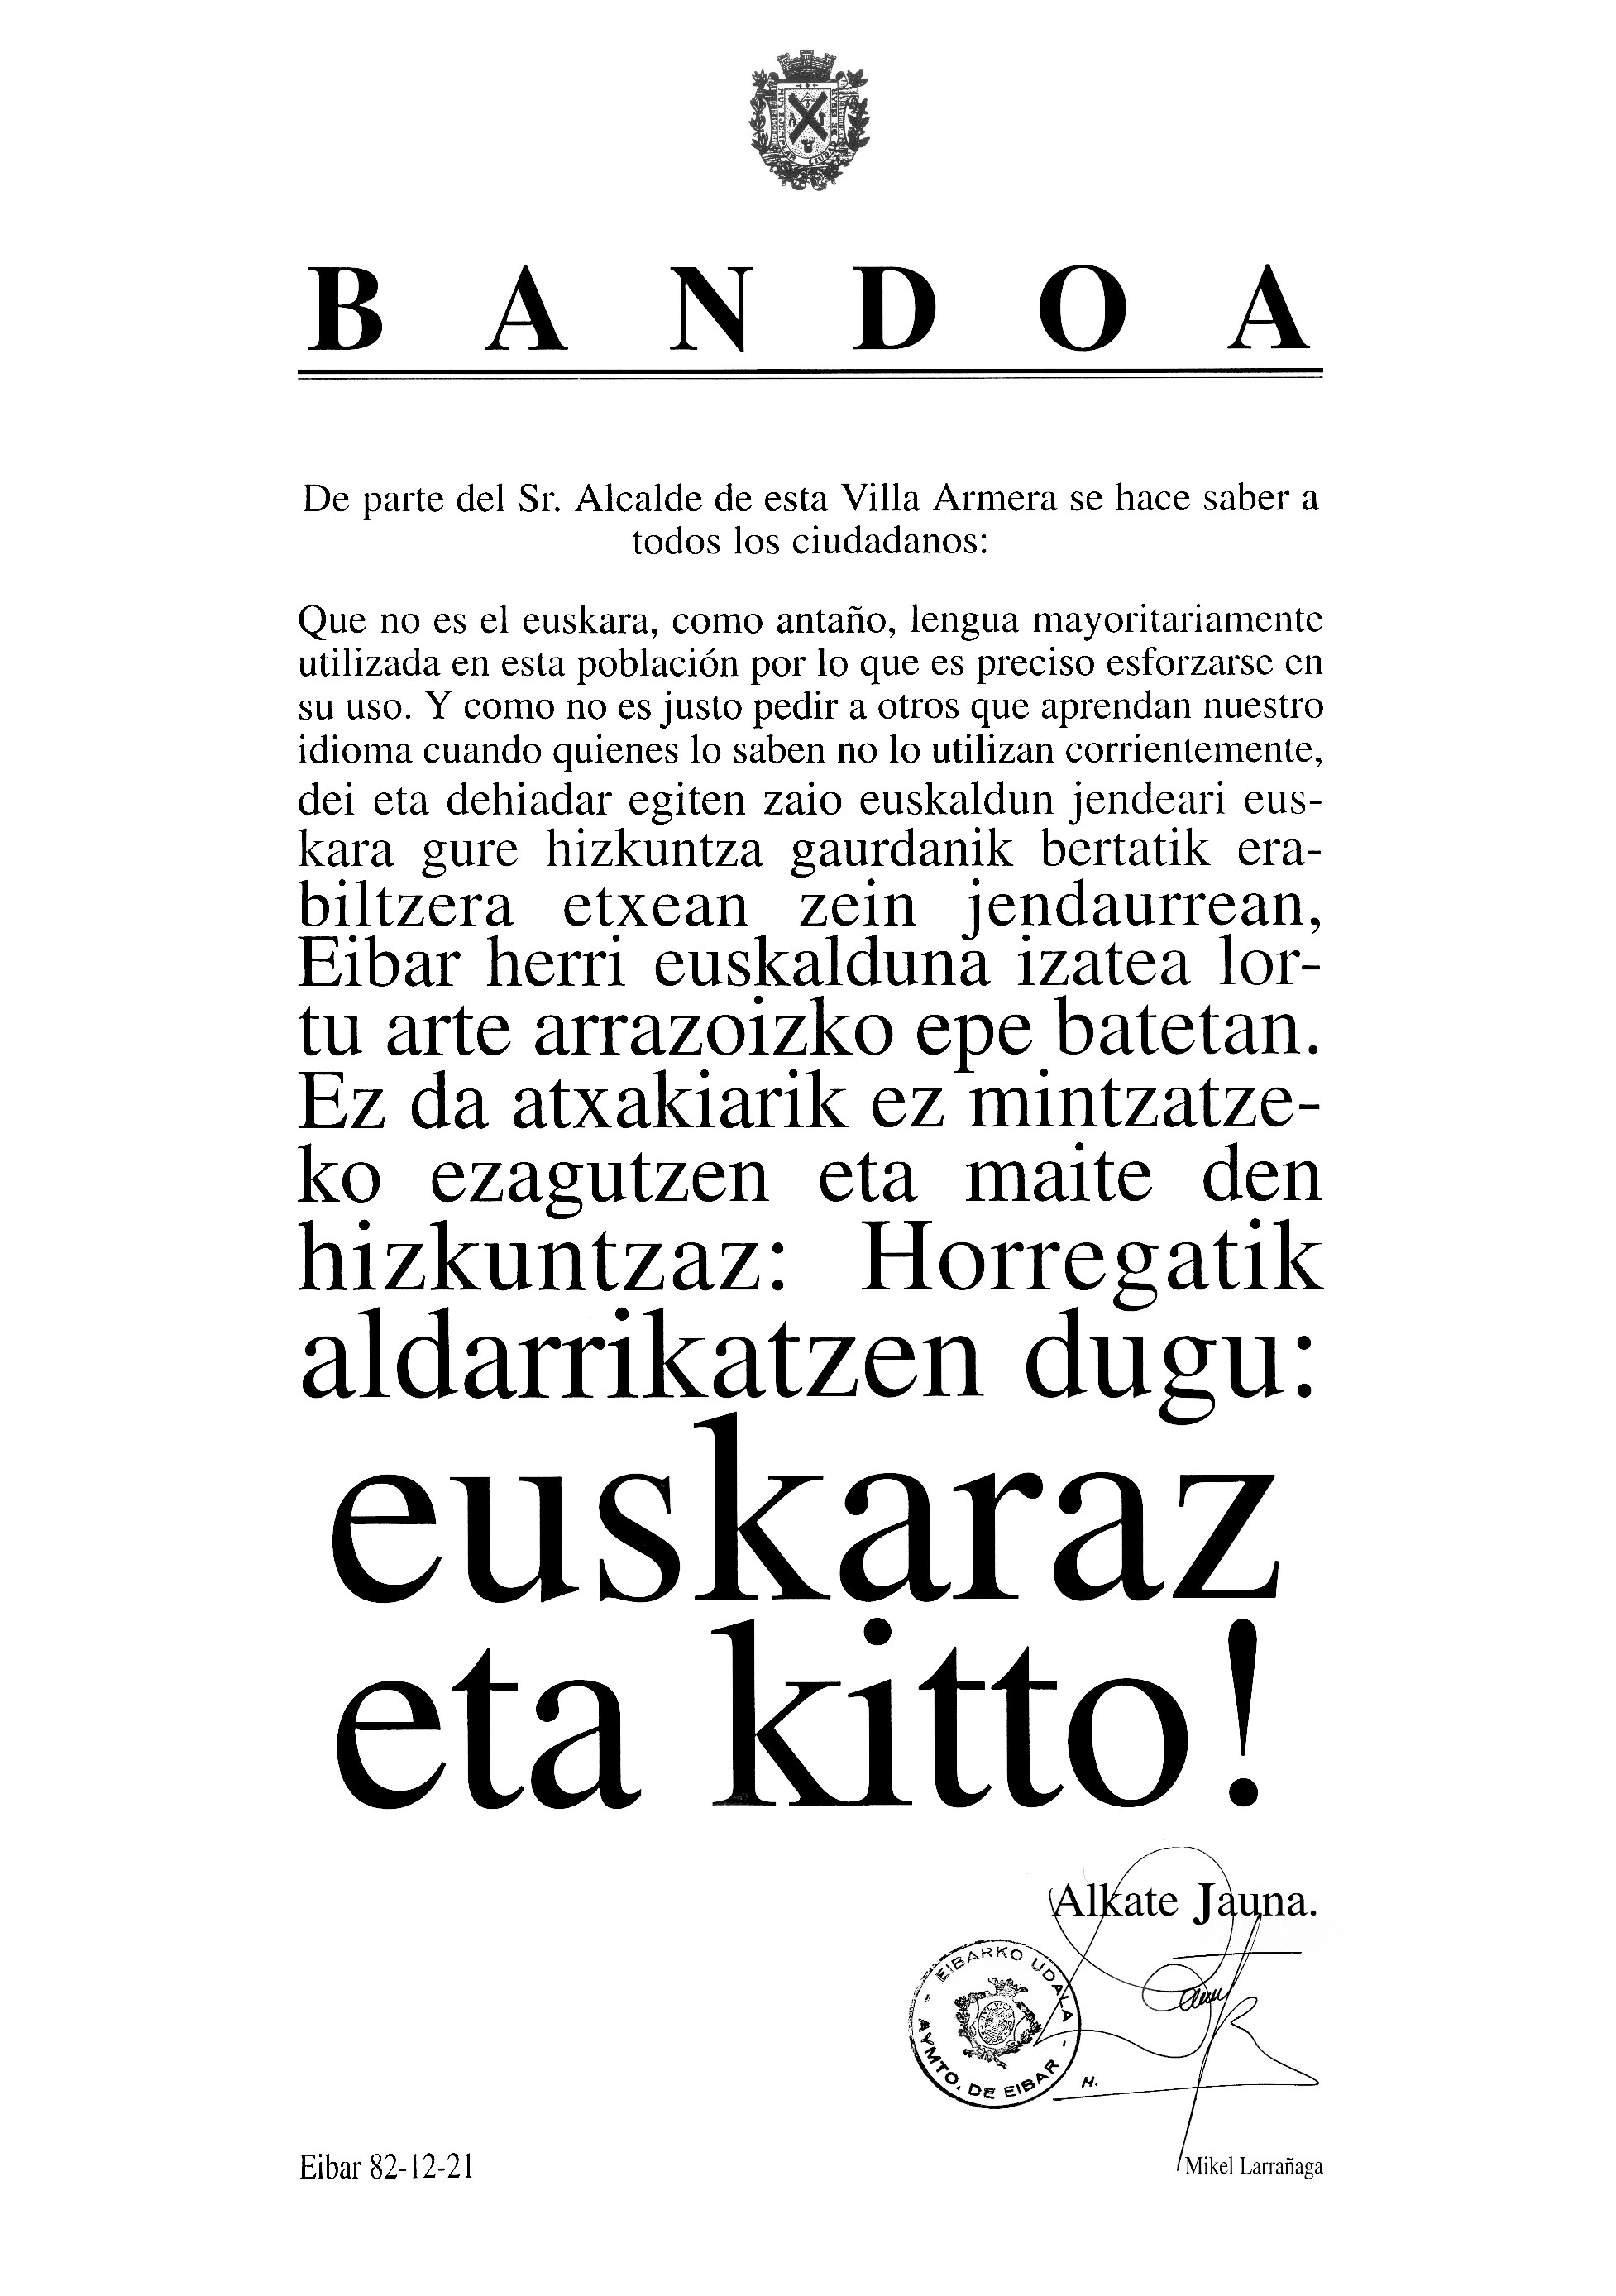 Euskaraz eta kitto! - Eibarko Udala, Bandoa 1982